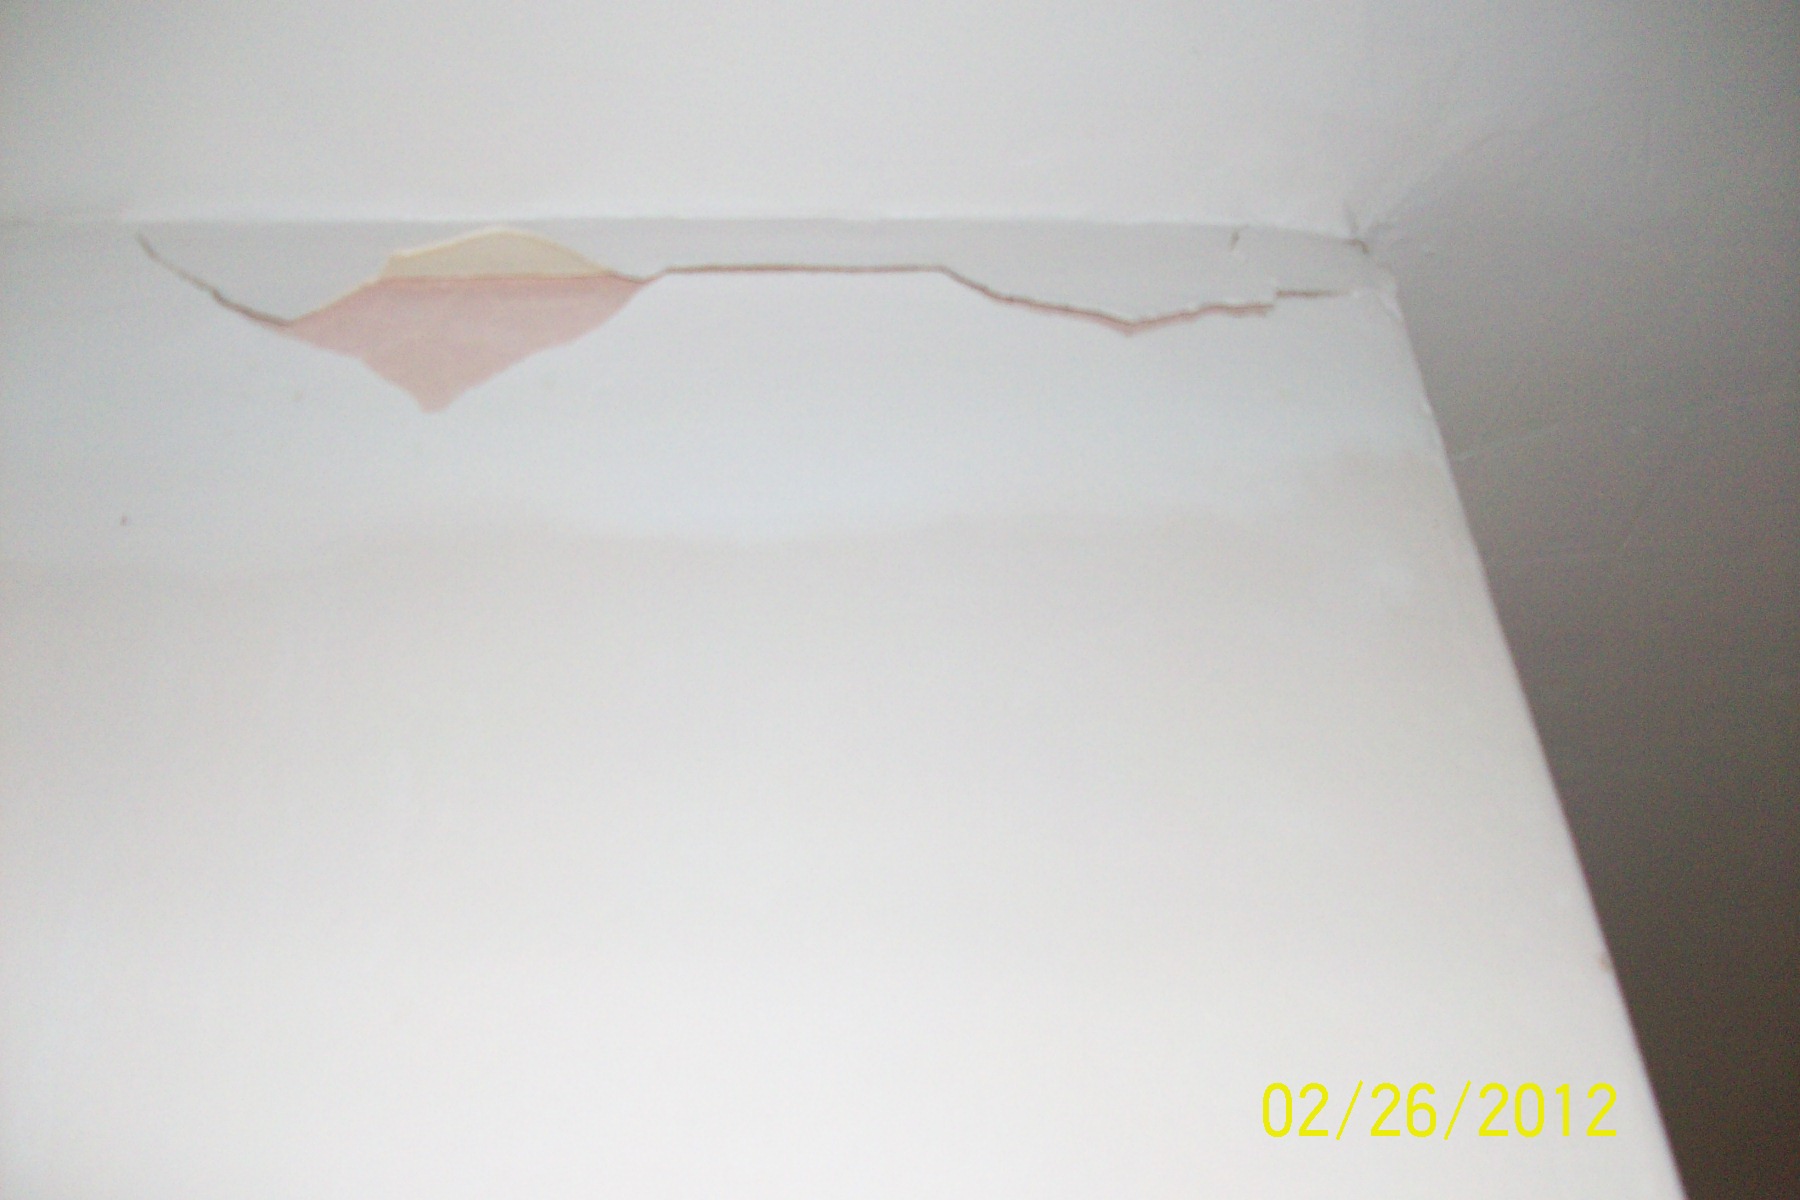 Cracks in plaster by ceiling sinkhole Orlando